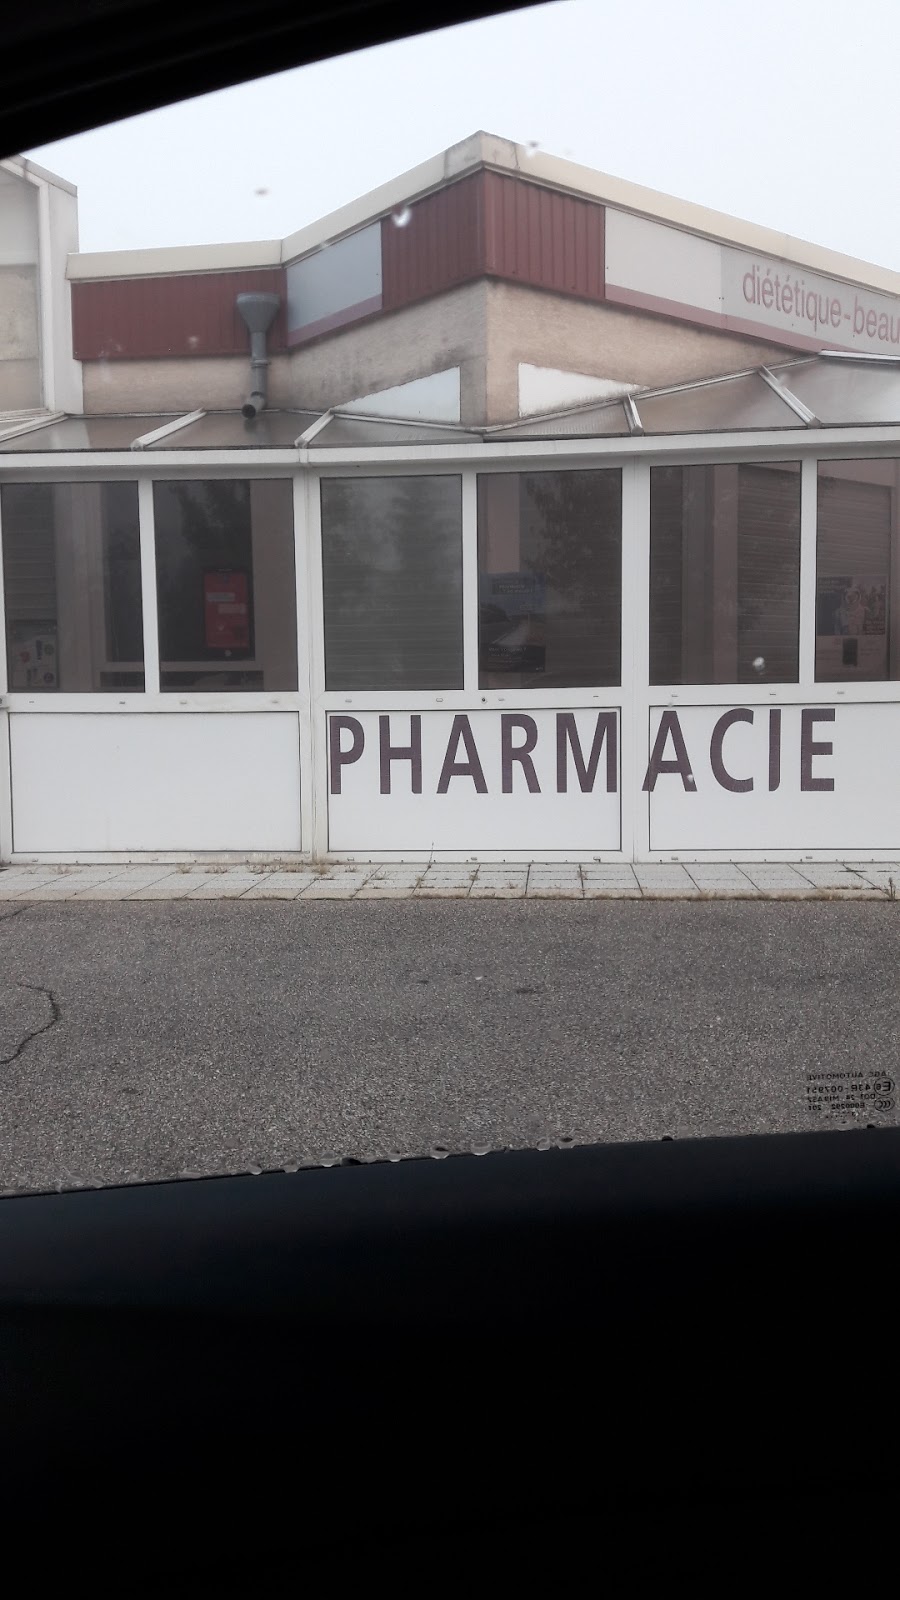 Pharmacie Breuil Pont a Mousson